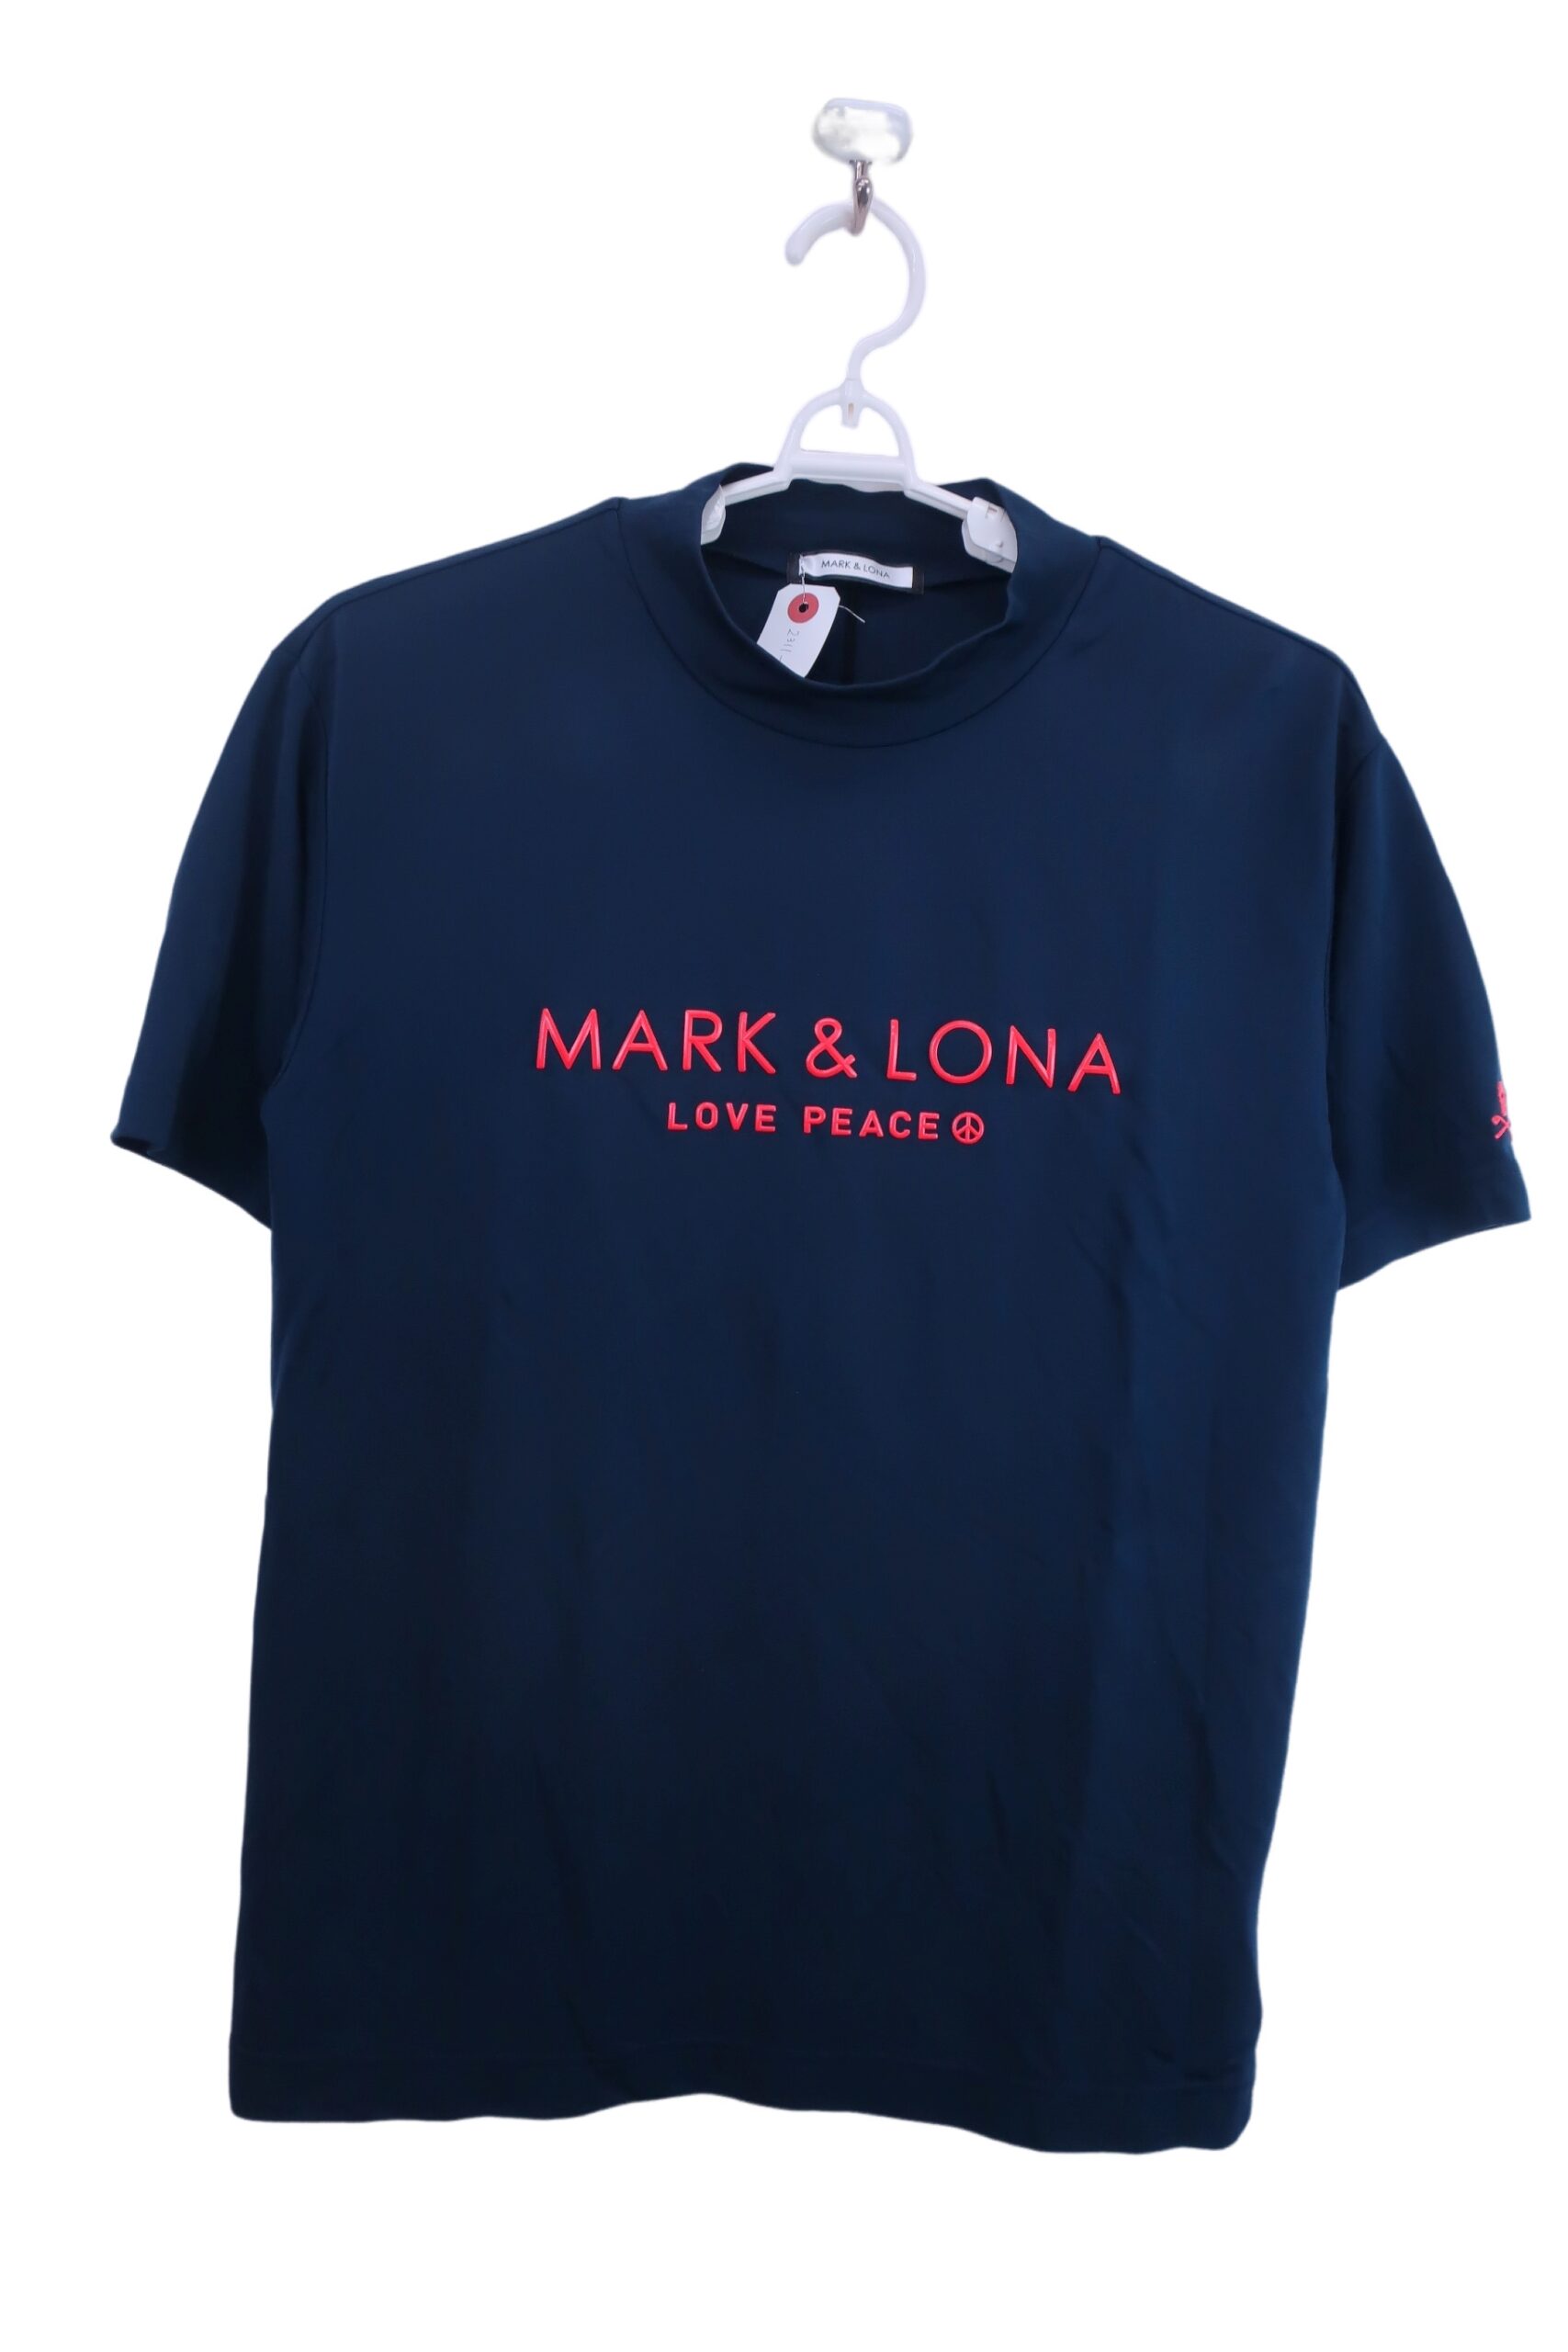 MARK&LONAモックネックシャツ紺メンズ46MLM-1B-AA05